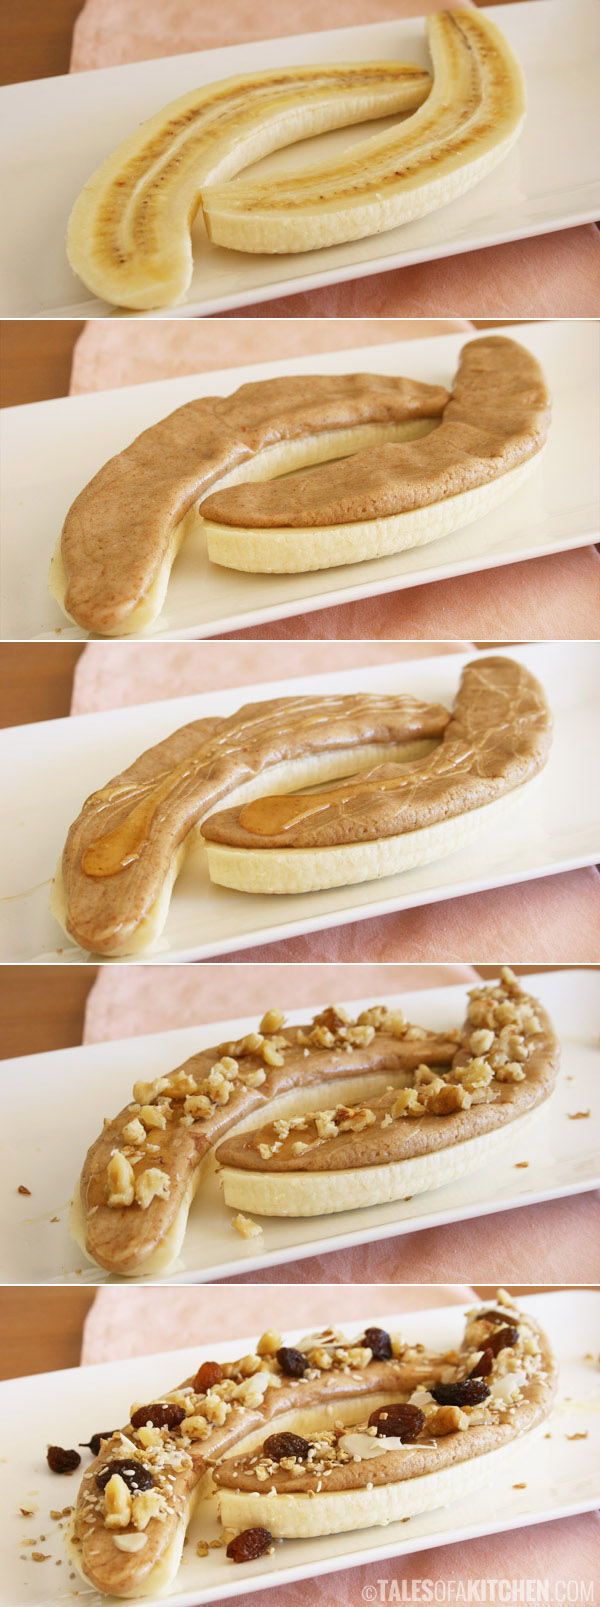 Almond Butter and Banana Open Sandwich step 1 recipe